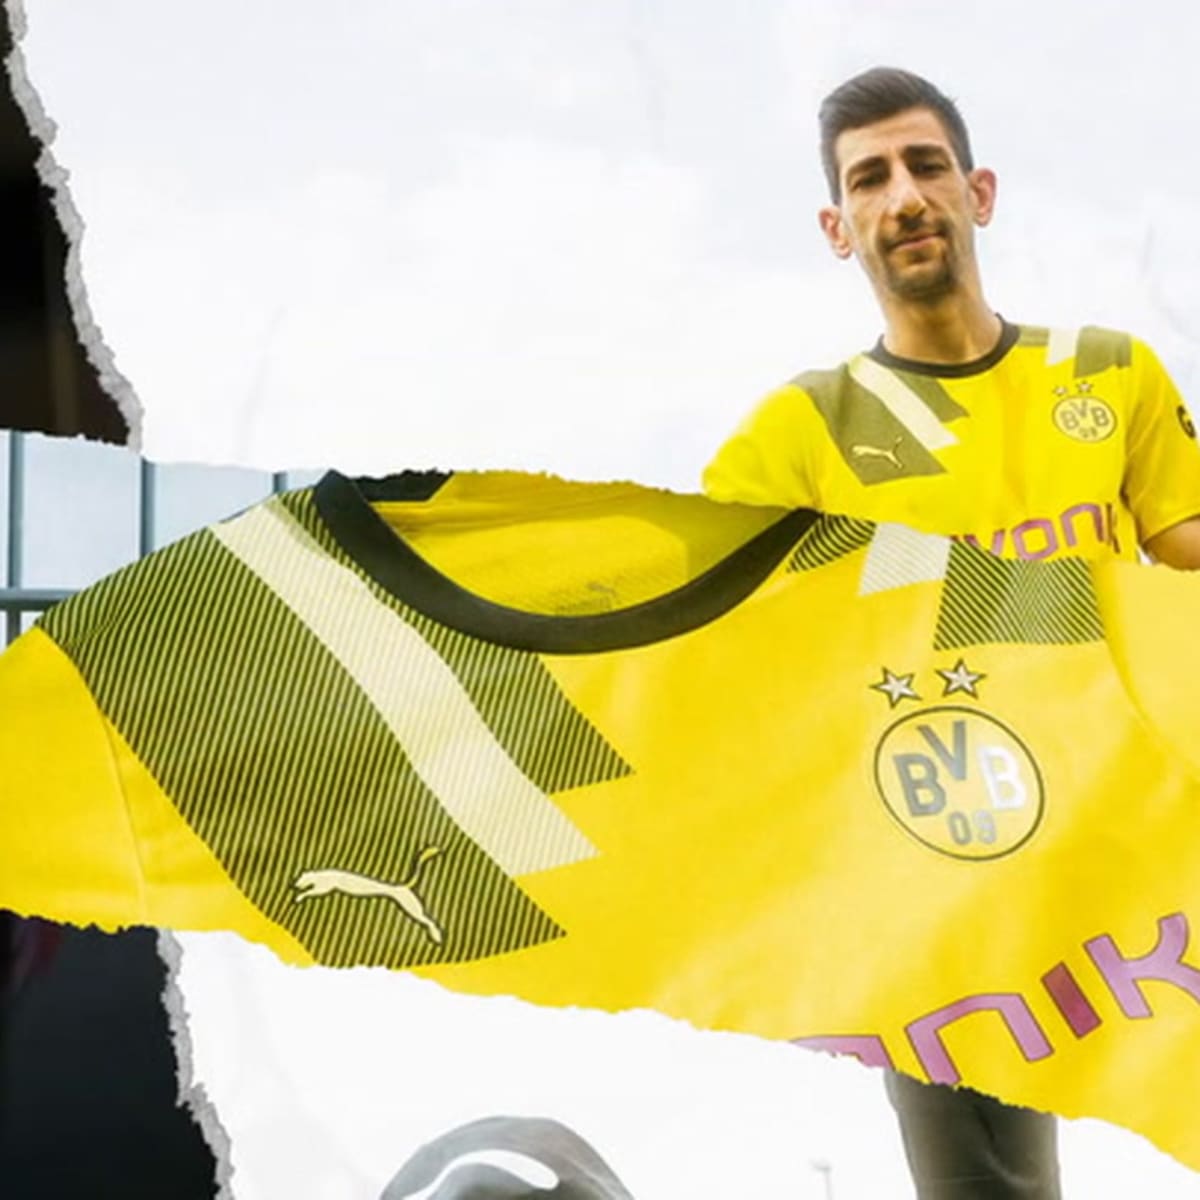 Dortmund 23-24 Cup Kit Revealed - Footy Headlines